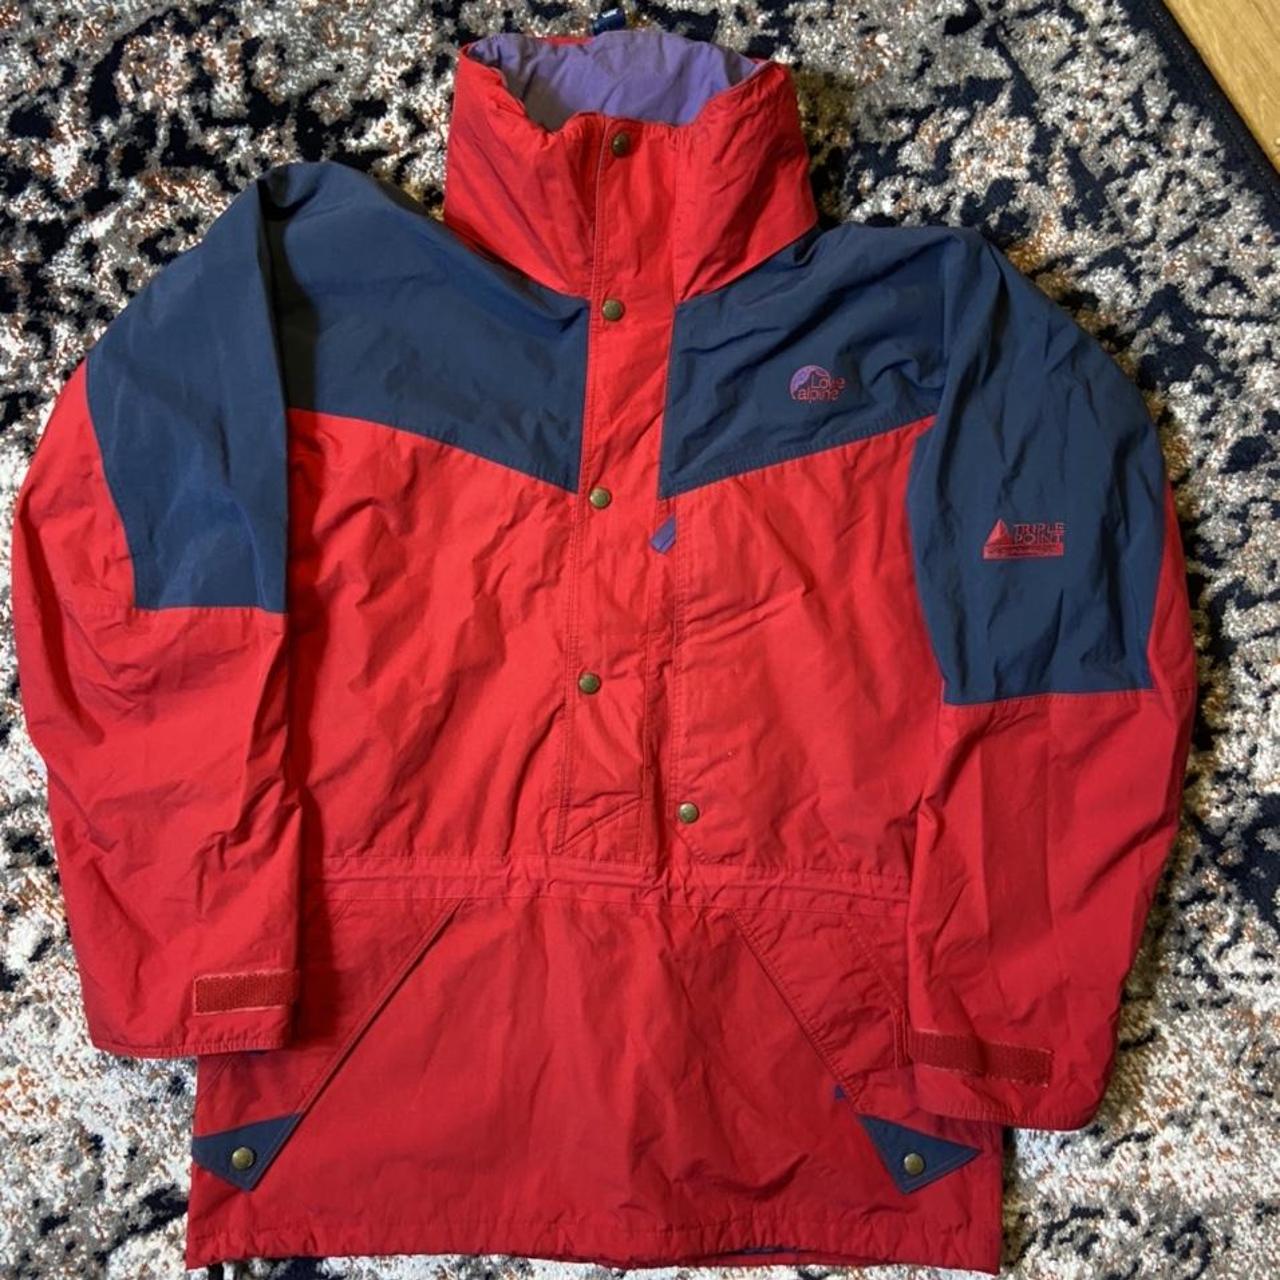 Goretex Anorak Style Jacket By Lowe Alpine Red with... - Depop